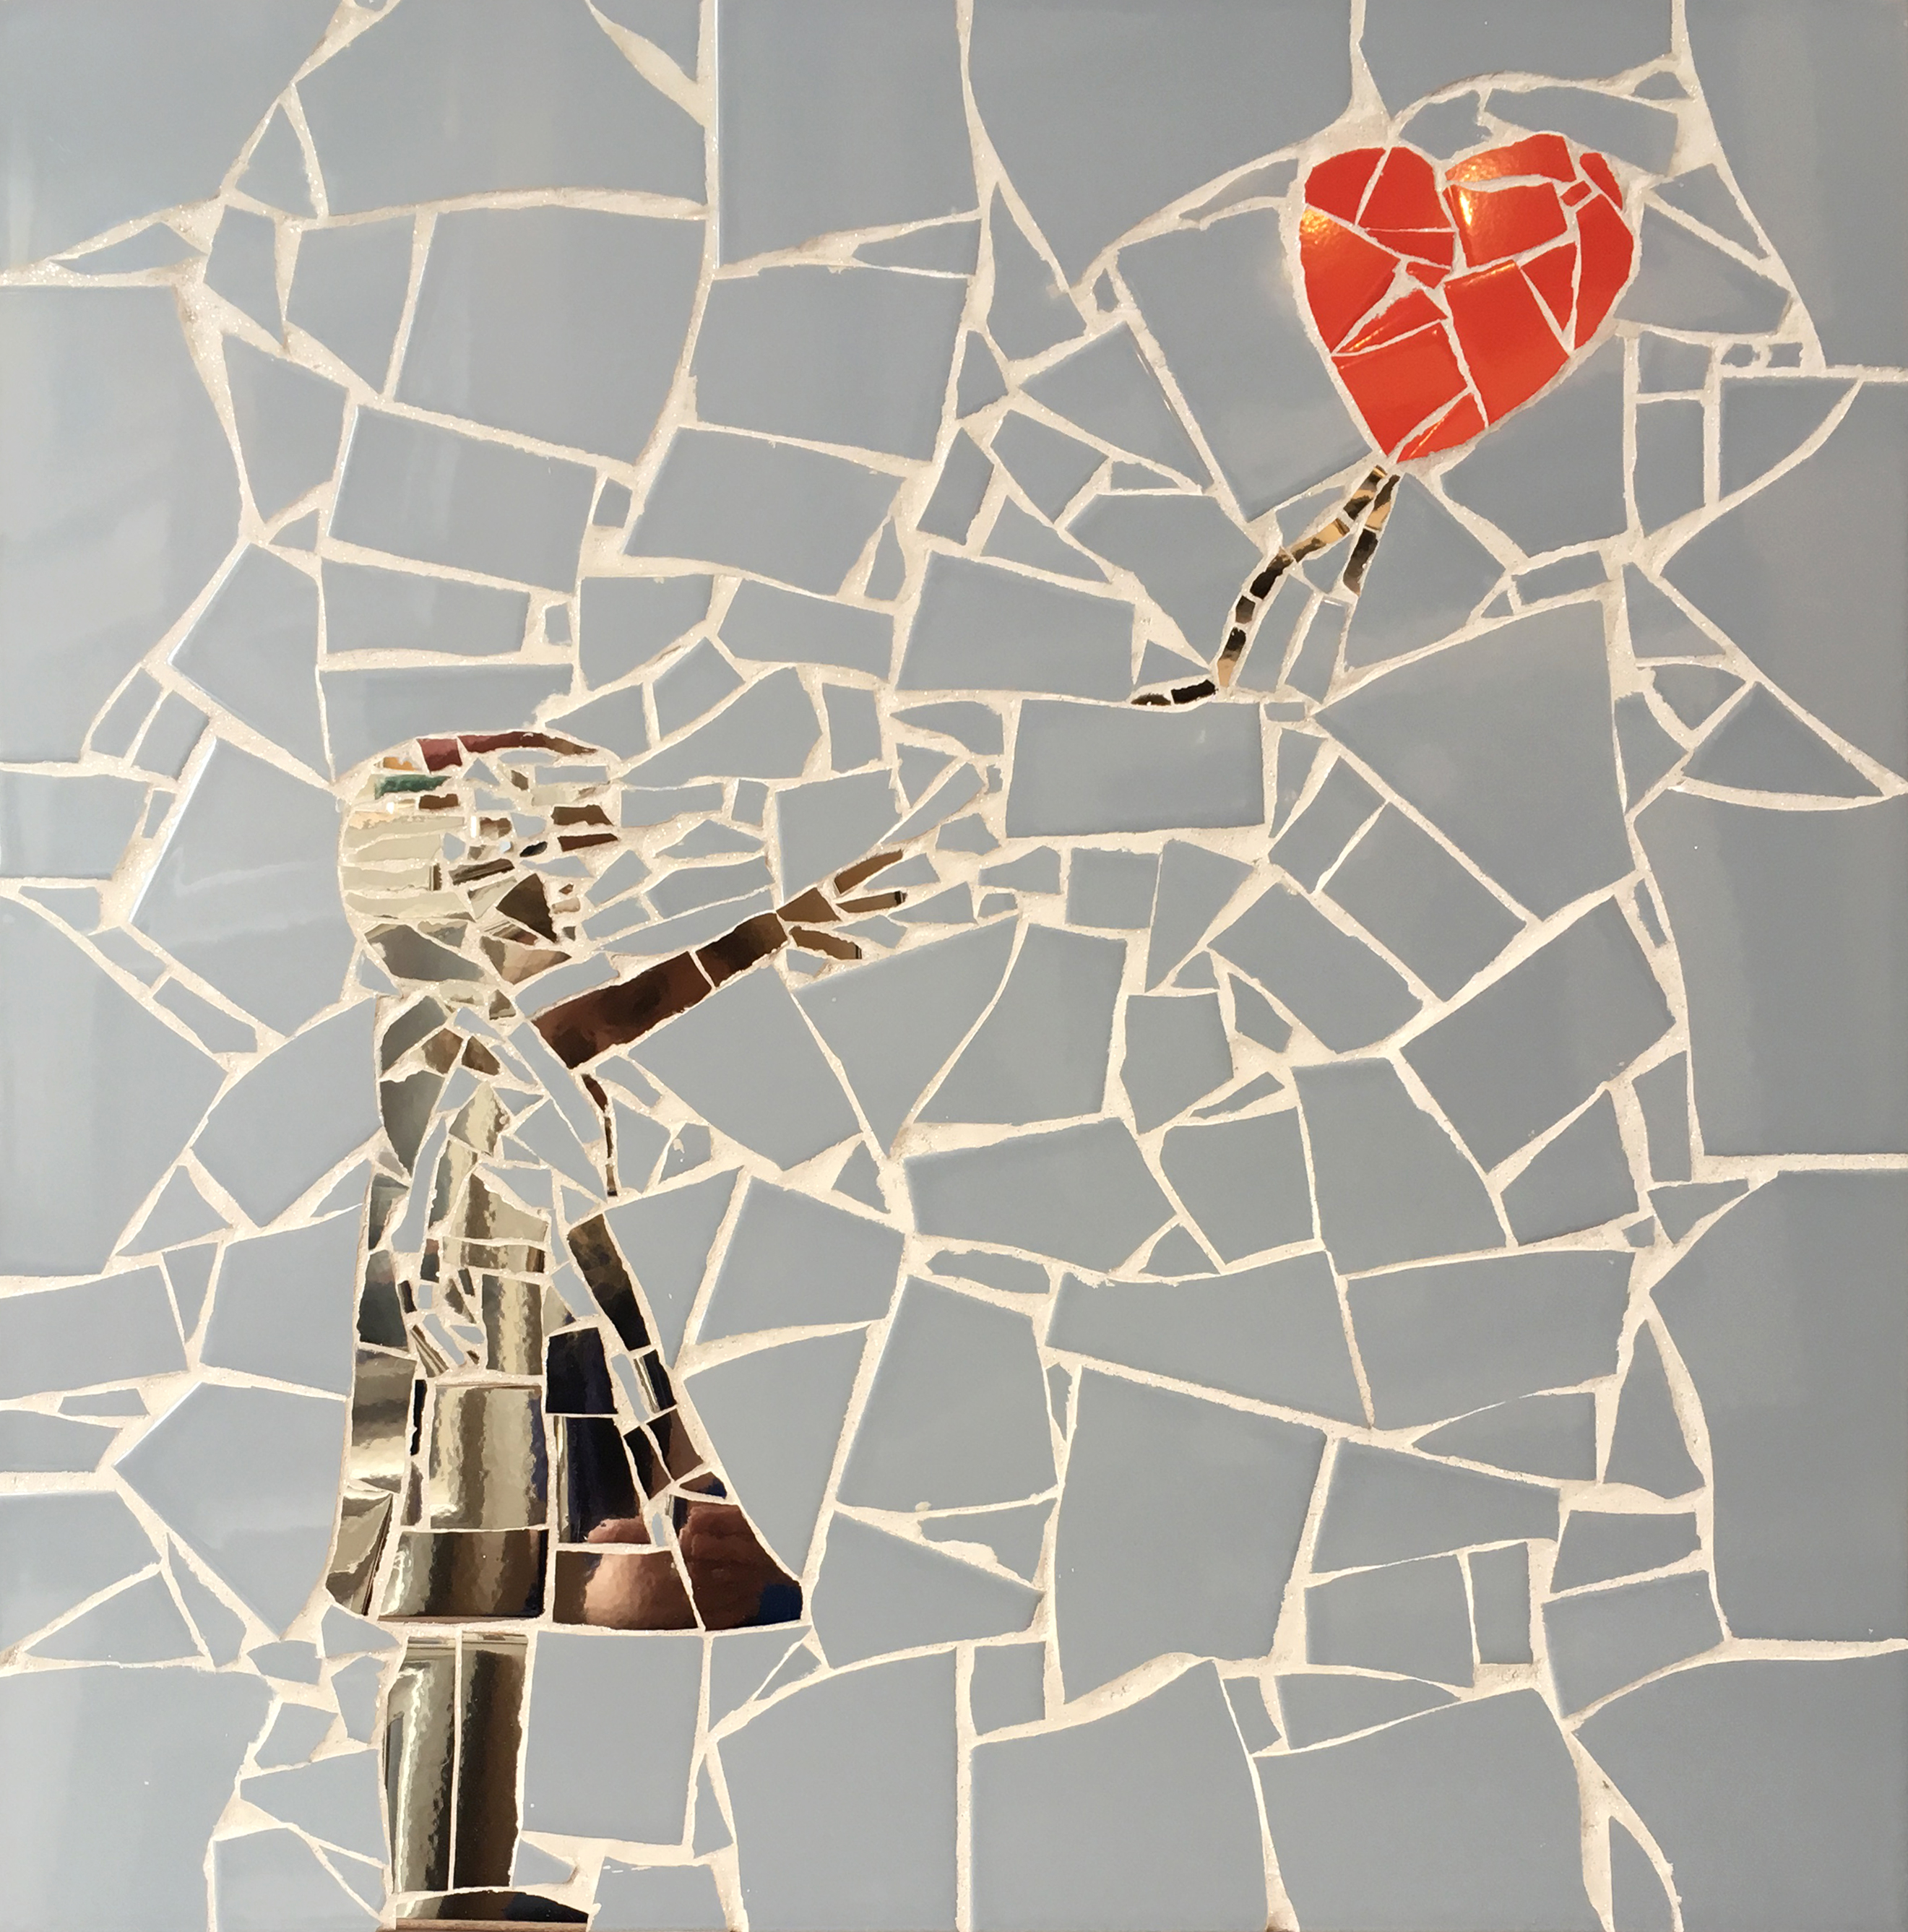 David O'Brien, Original Mosaic, Banksy - There's Always Hope (Silver)